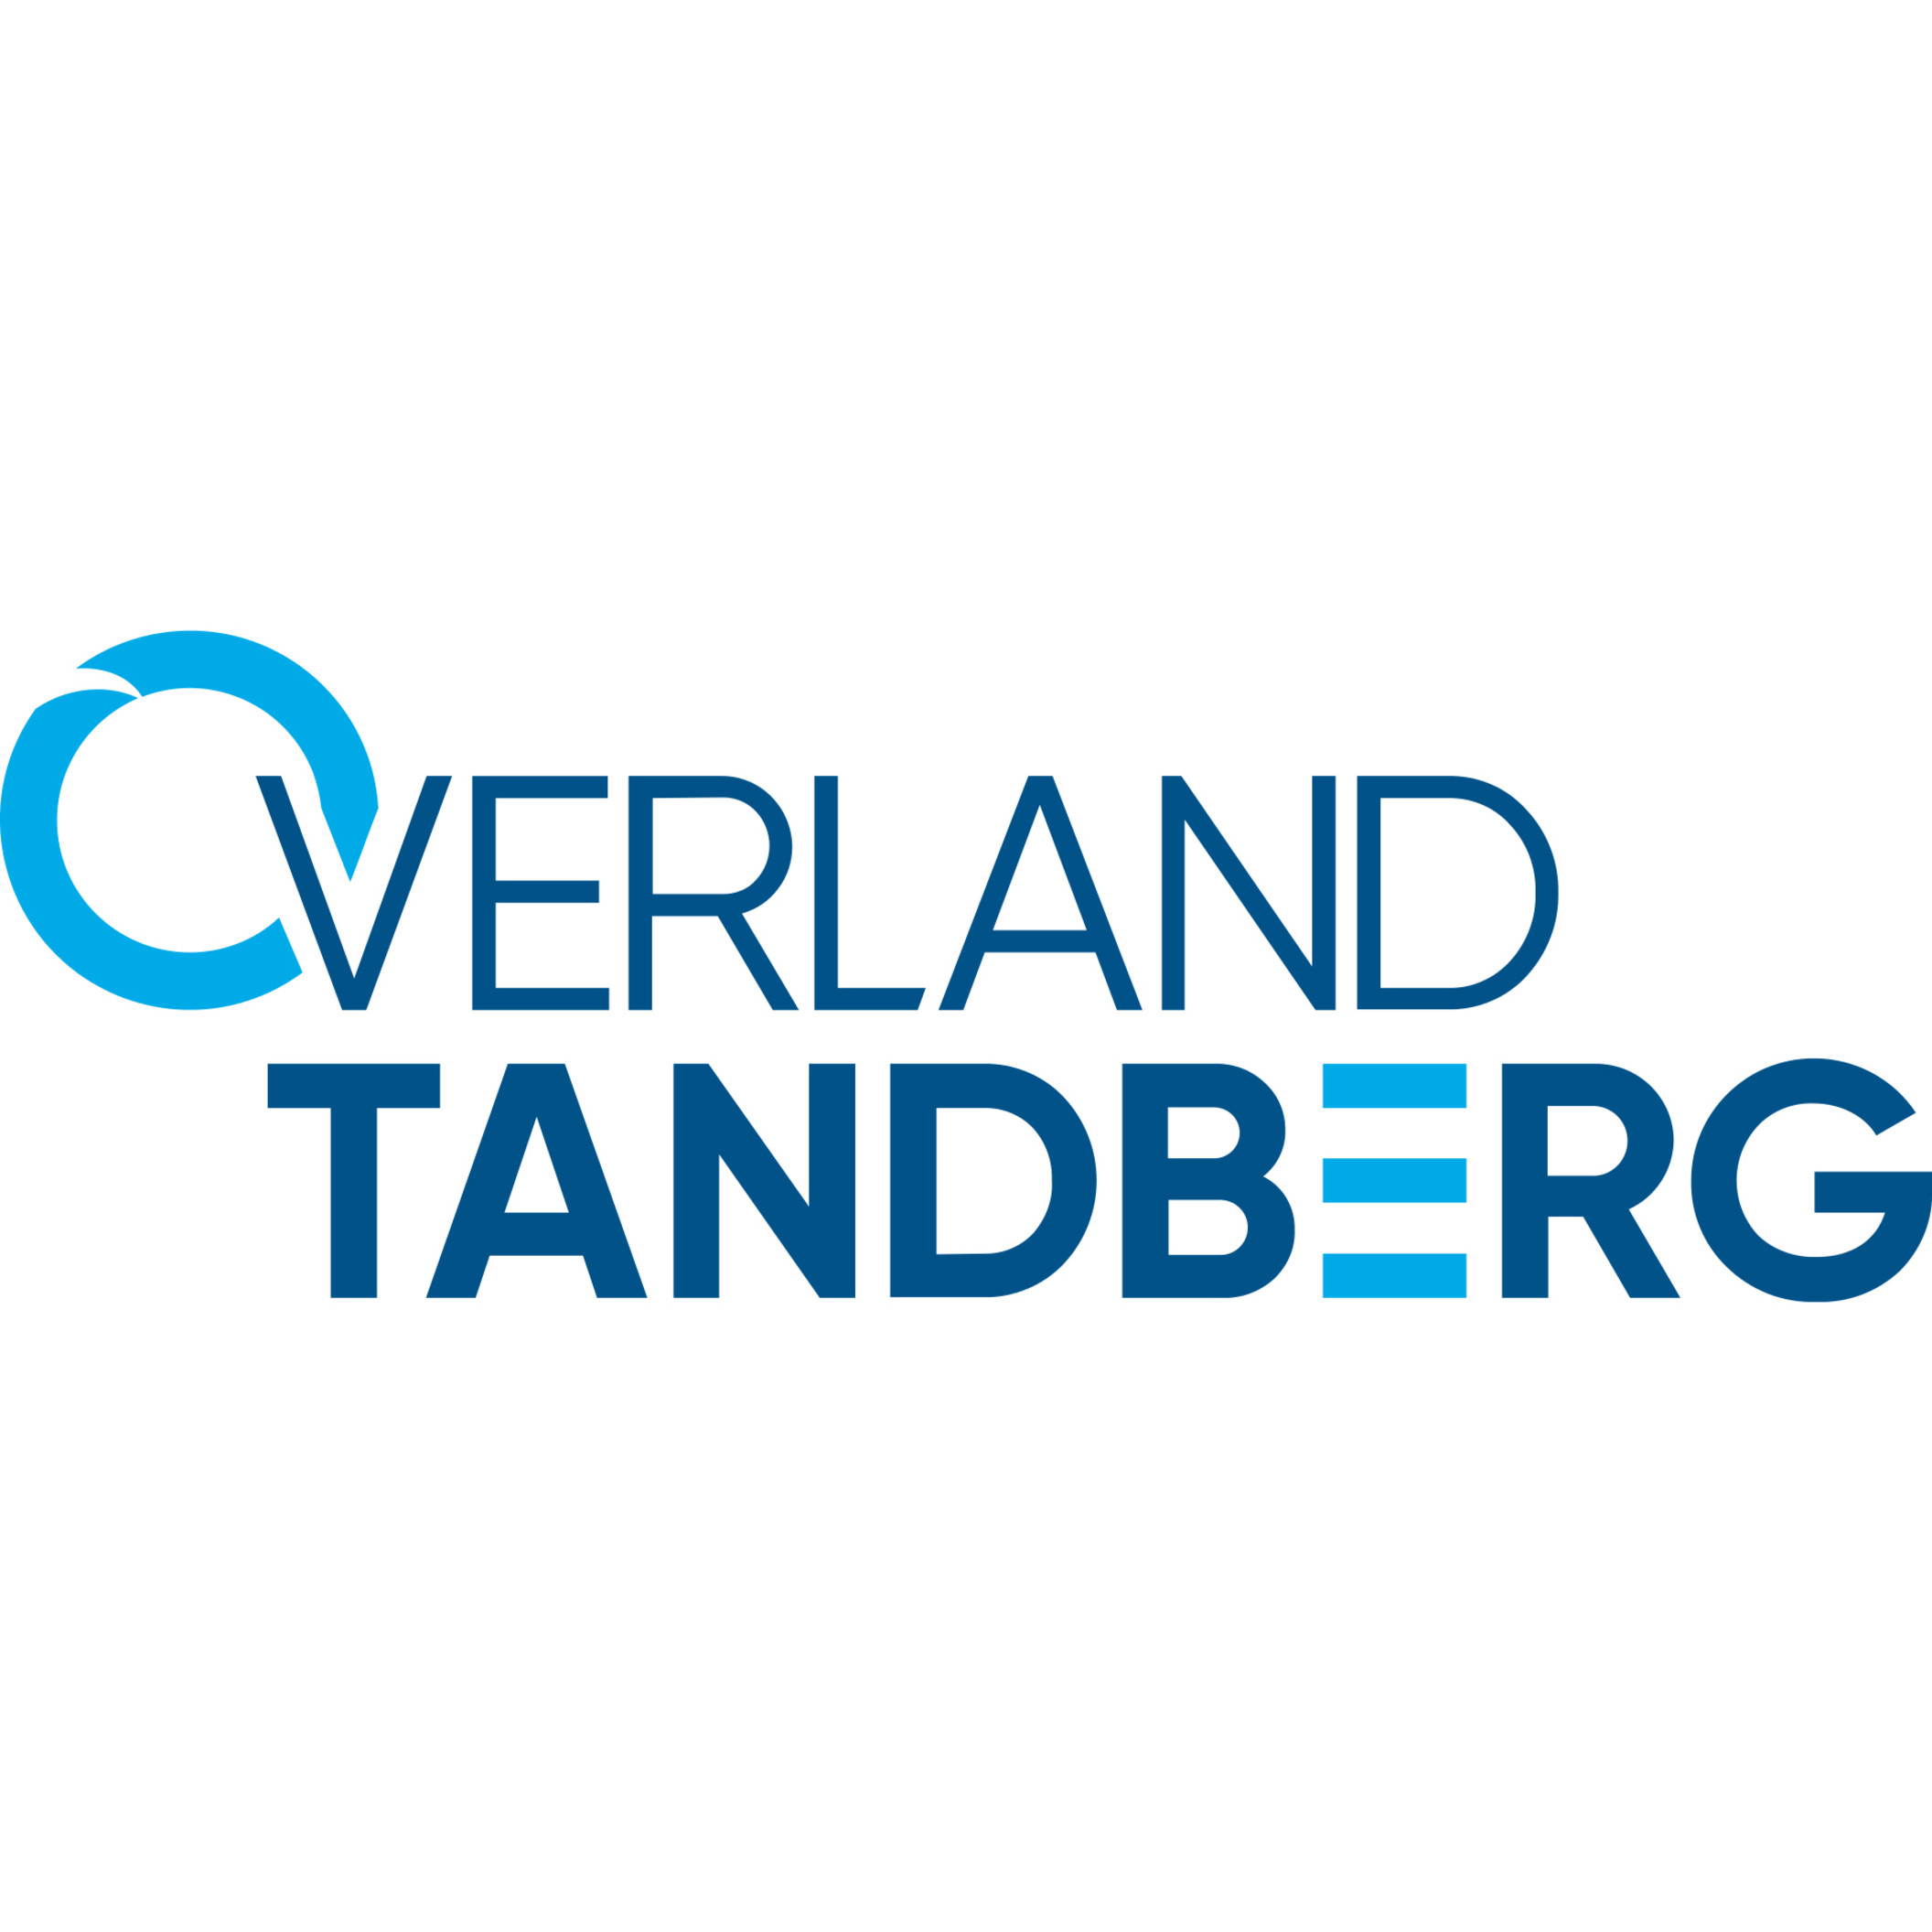 Overland rdxLOCK + s Care Bronze-LevelLicense4 TB CapacityPC 8870-SW